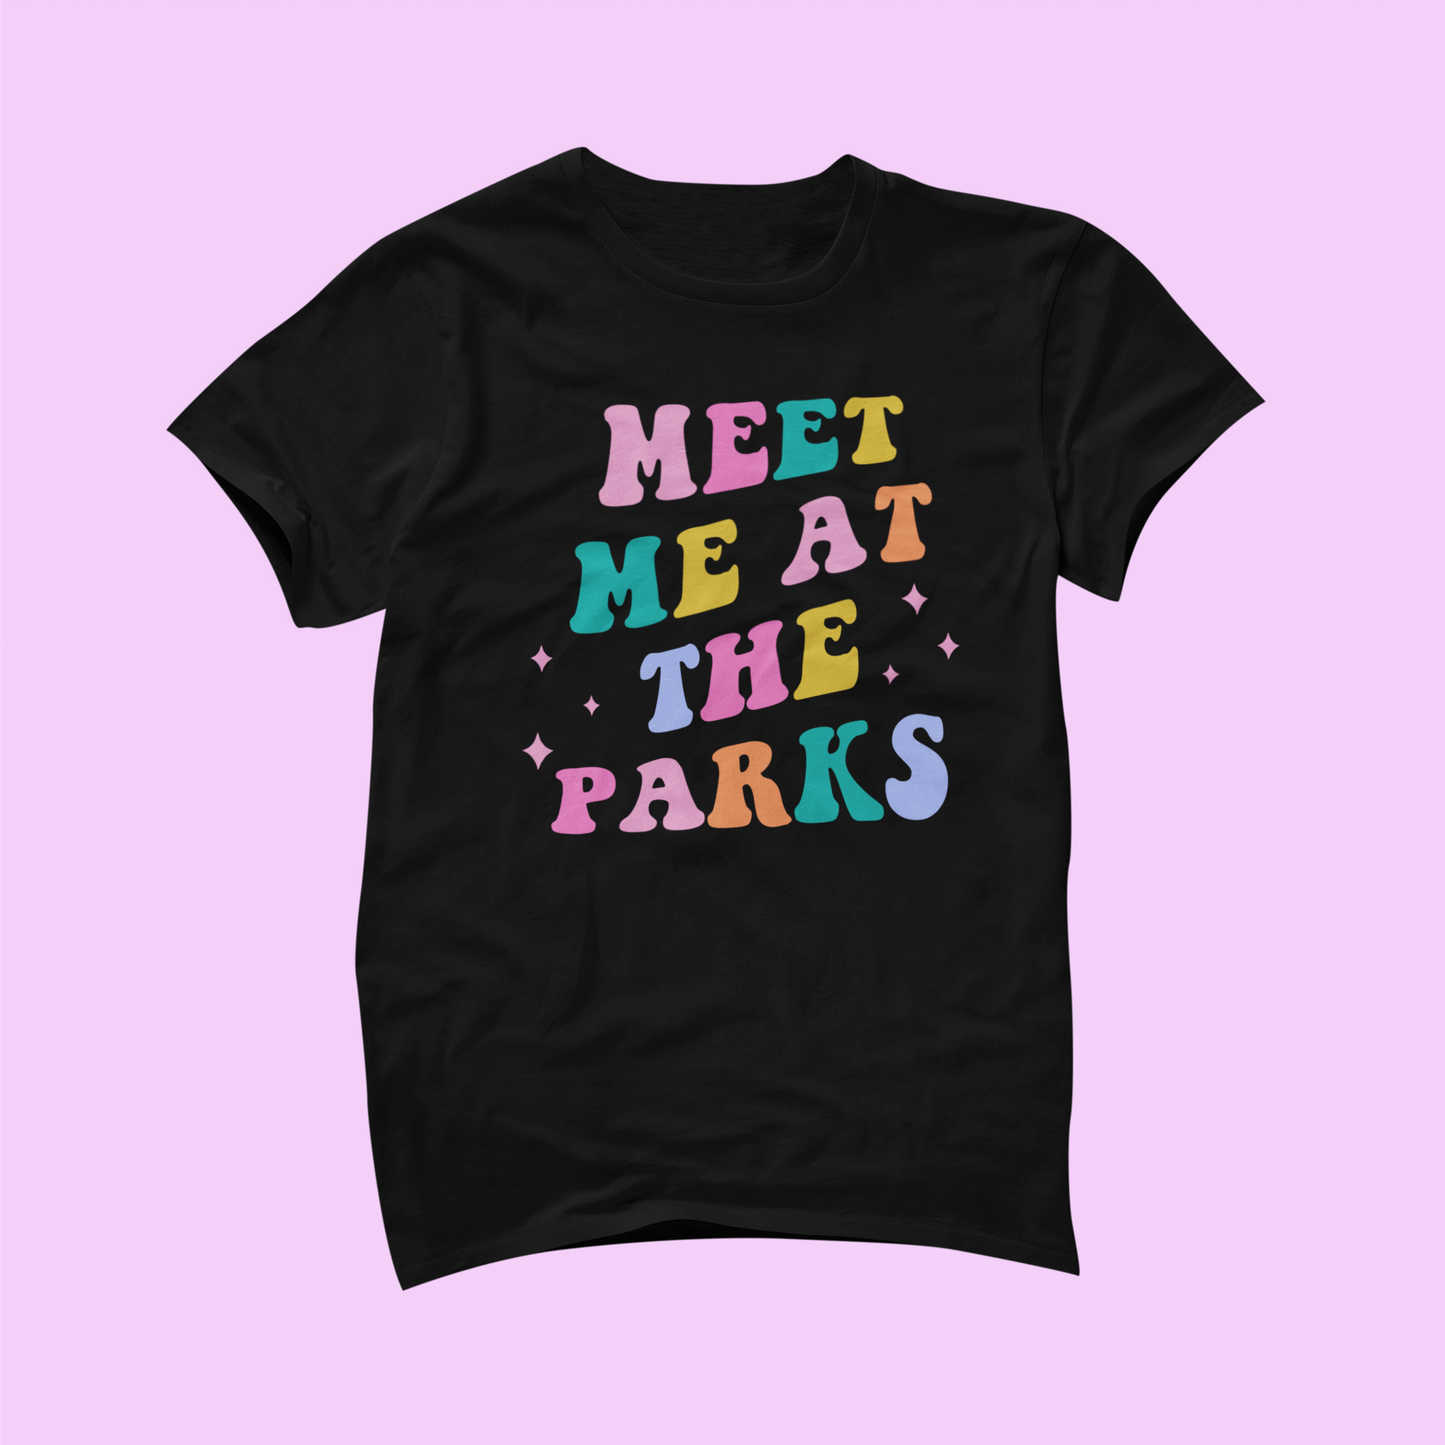 Meet Me at the Parks Shirt